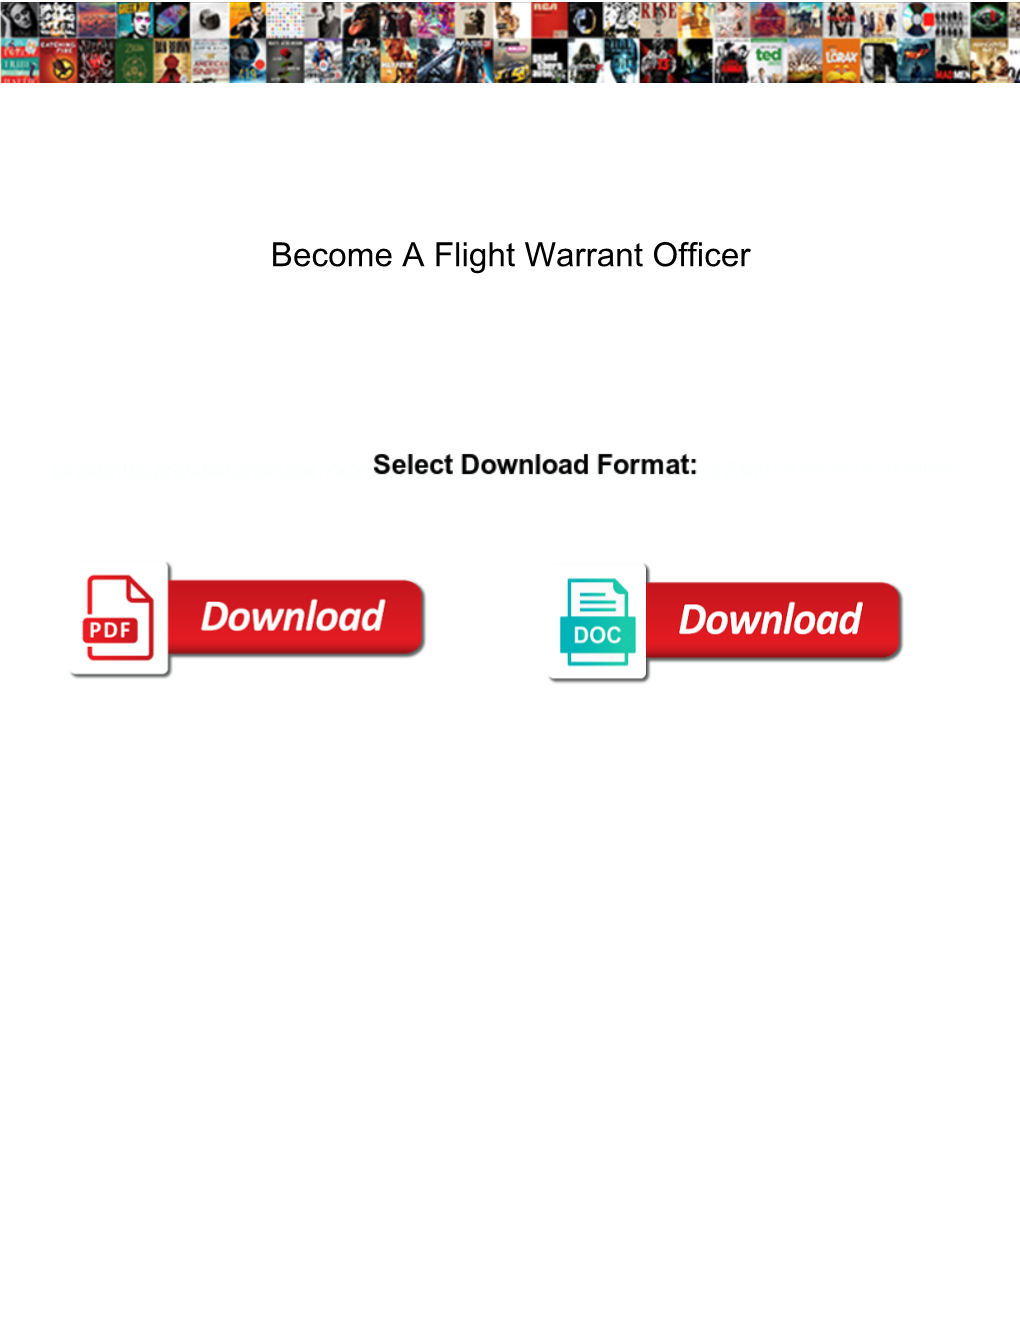 Become a Flight Warrant Officer